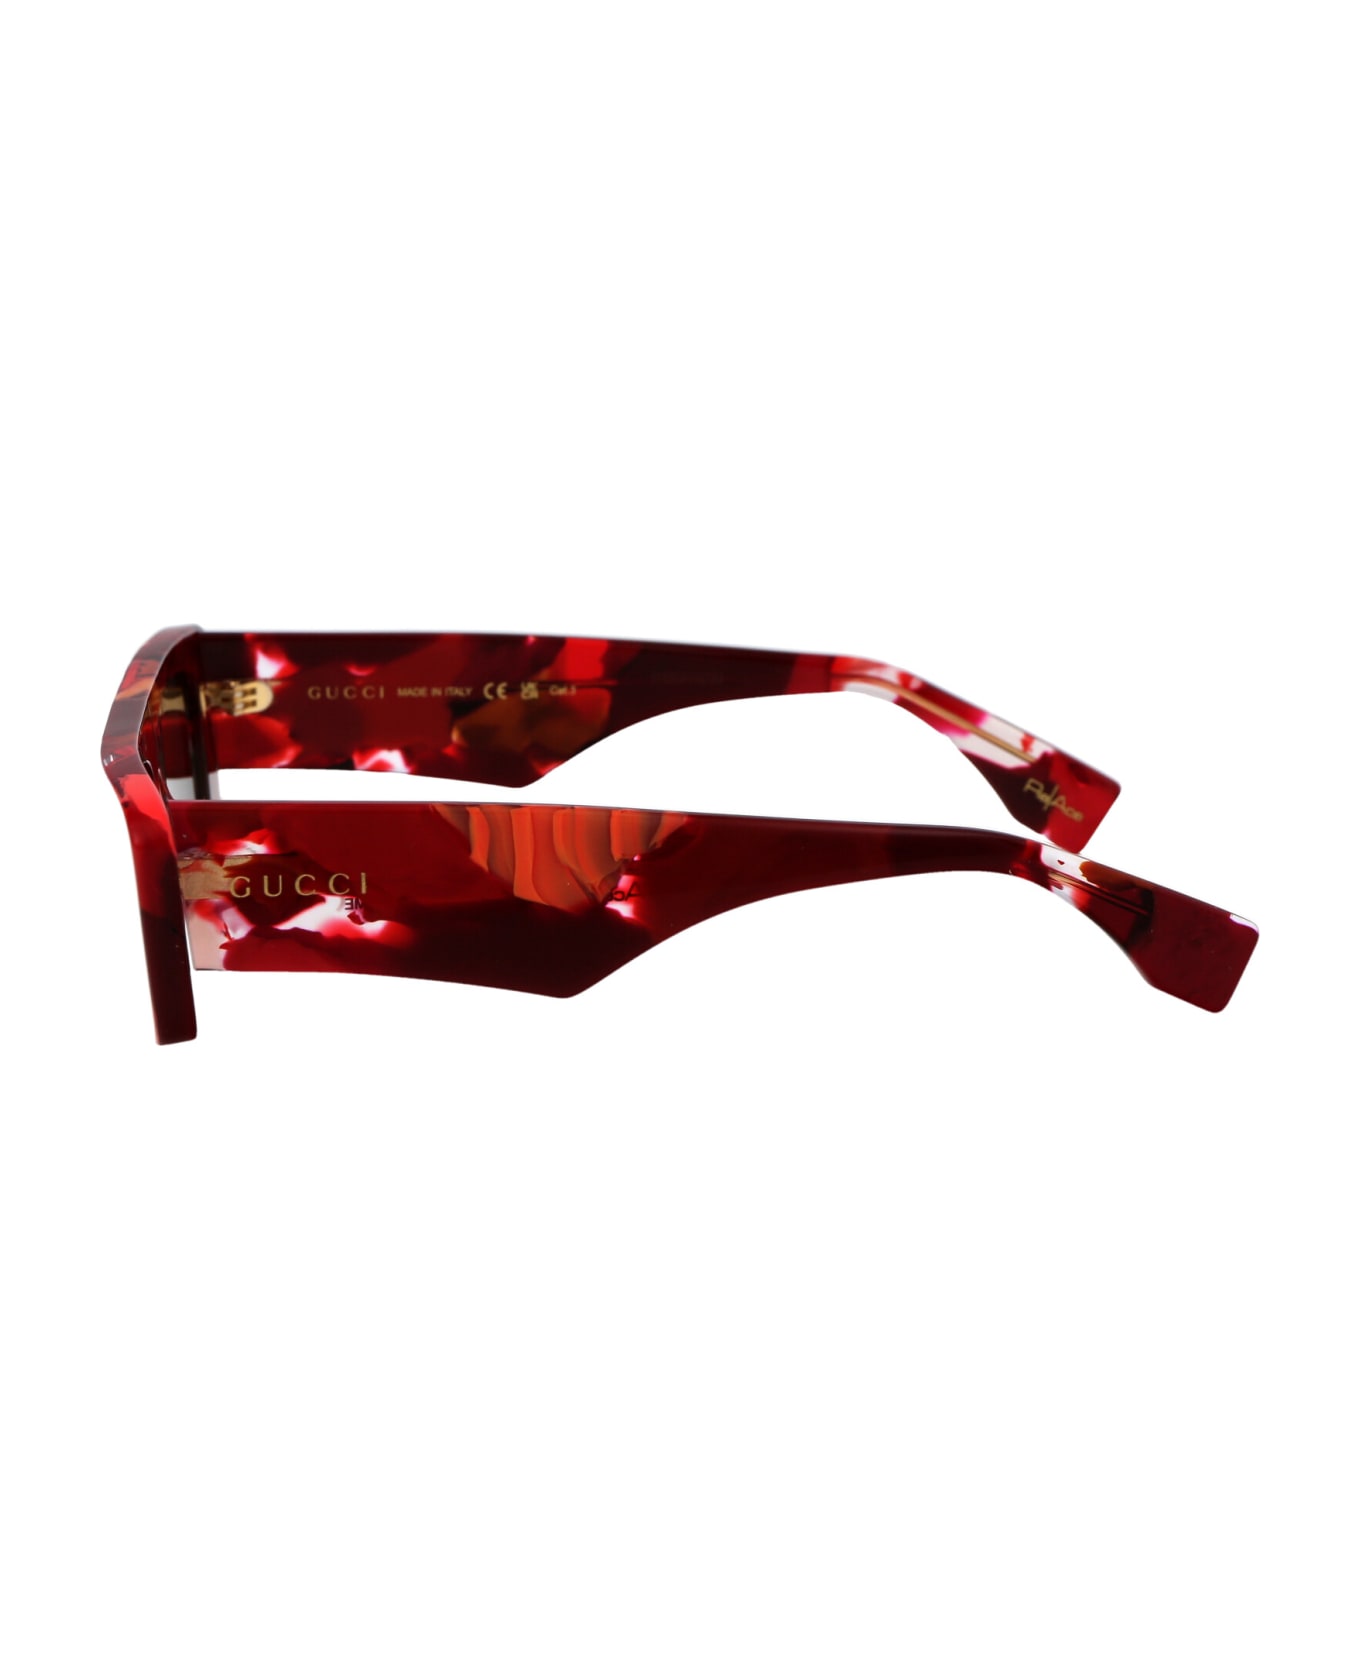 Gucci Eyewear Gg1625s Sunglasses - 002 RED RED GREY サングラス